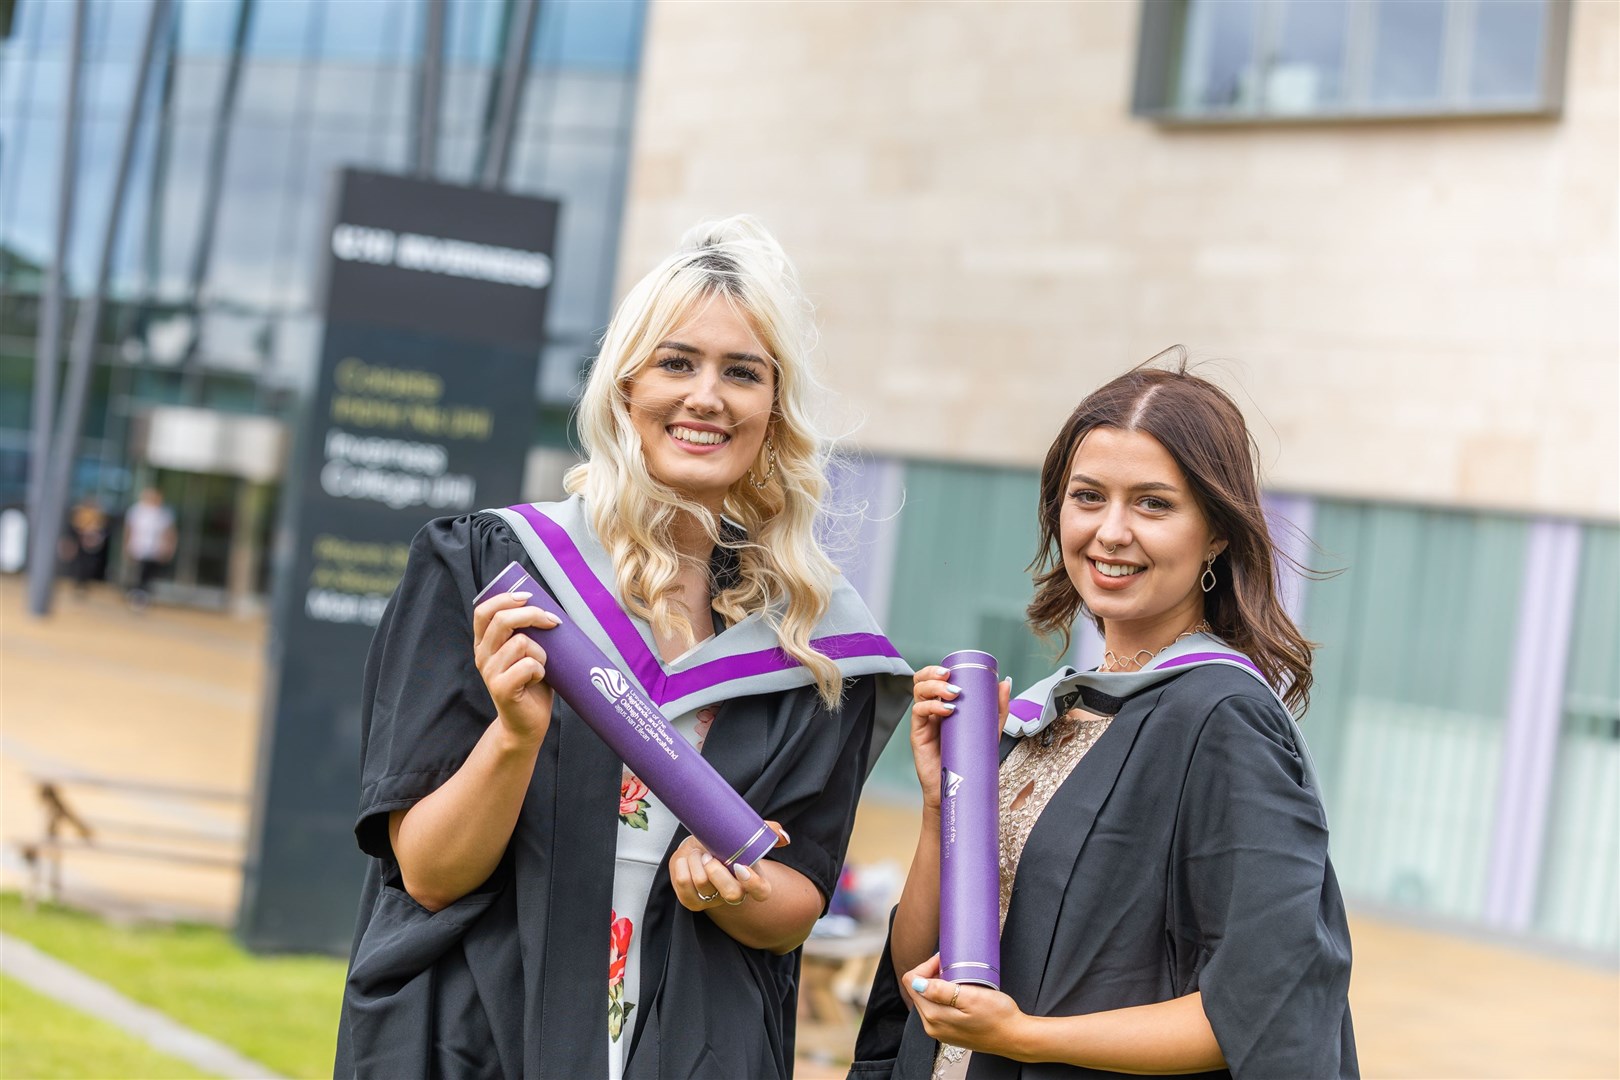 PGDE Primary graduates Emily Mackenzie of Inverness and Sorcha Shepherd from Invergordon are now probationary teachers.